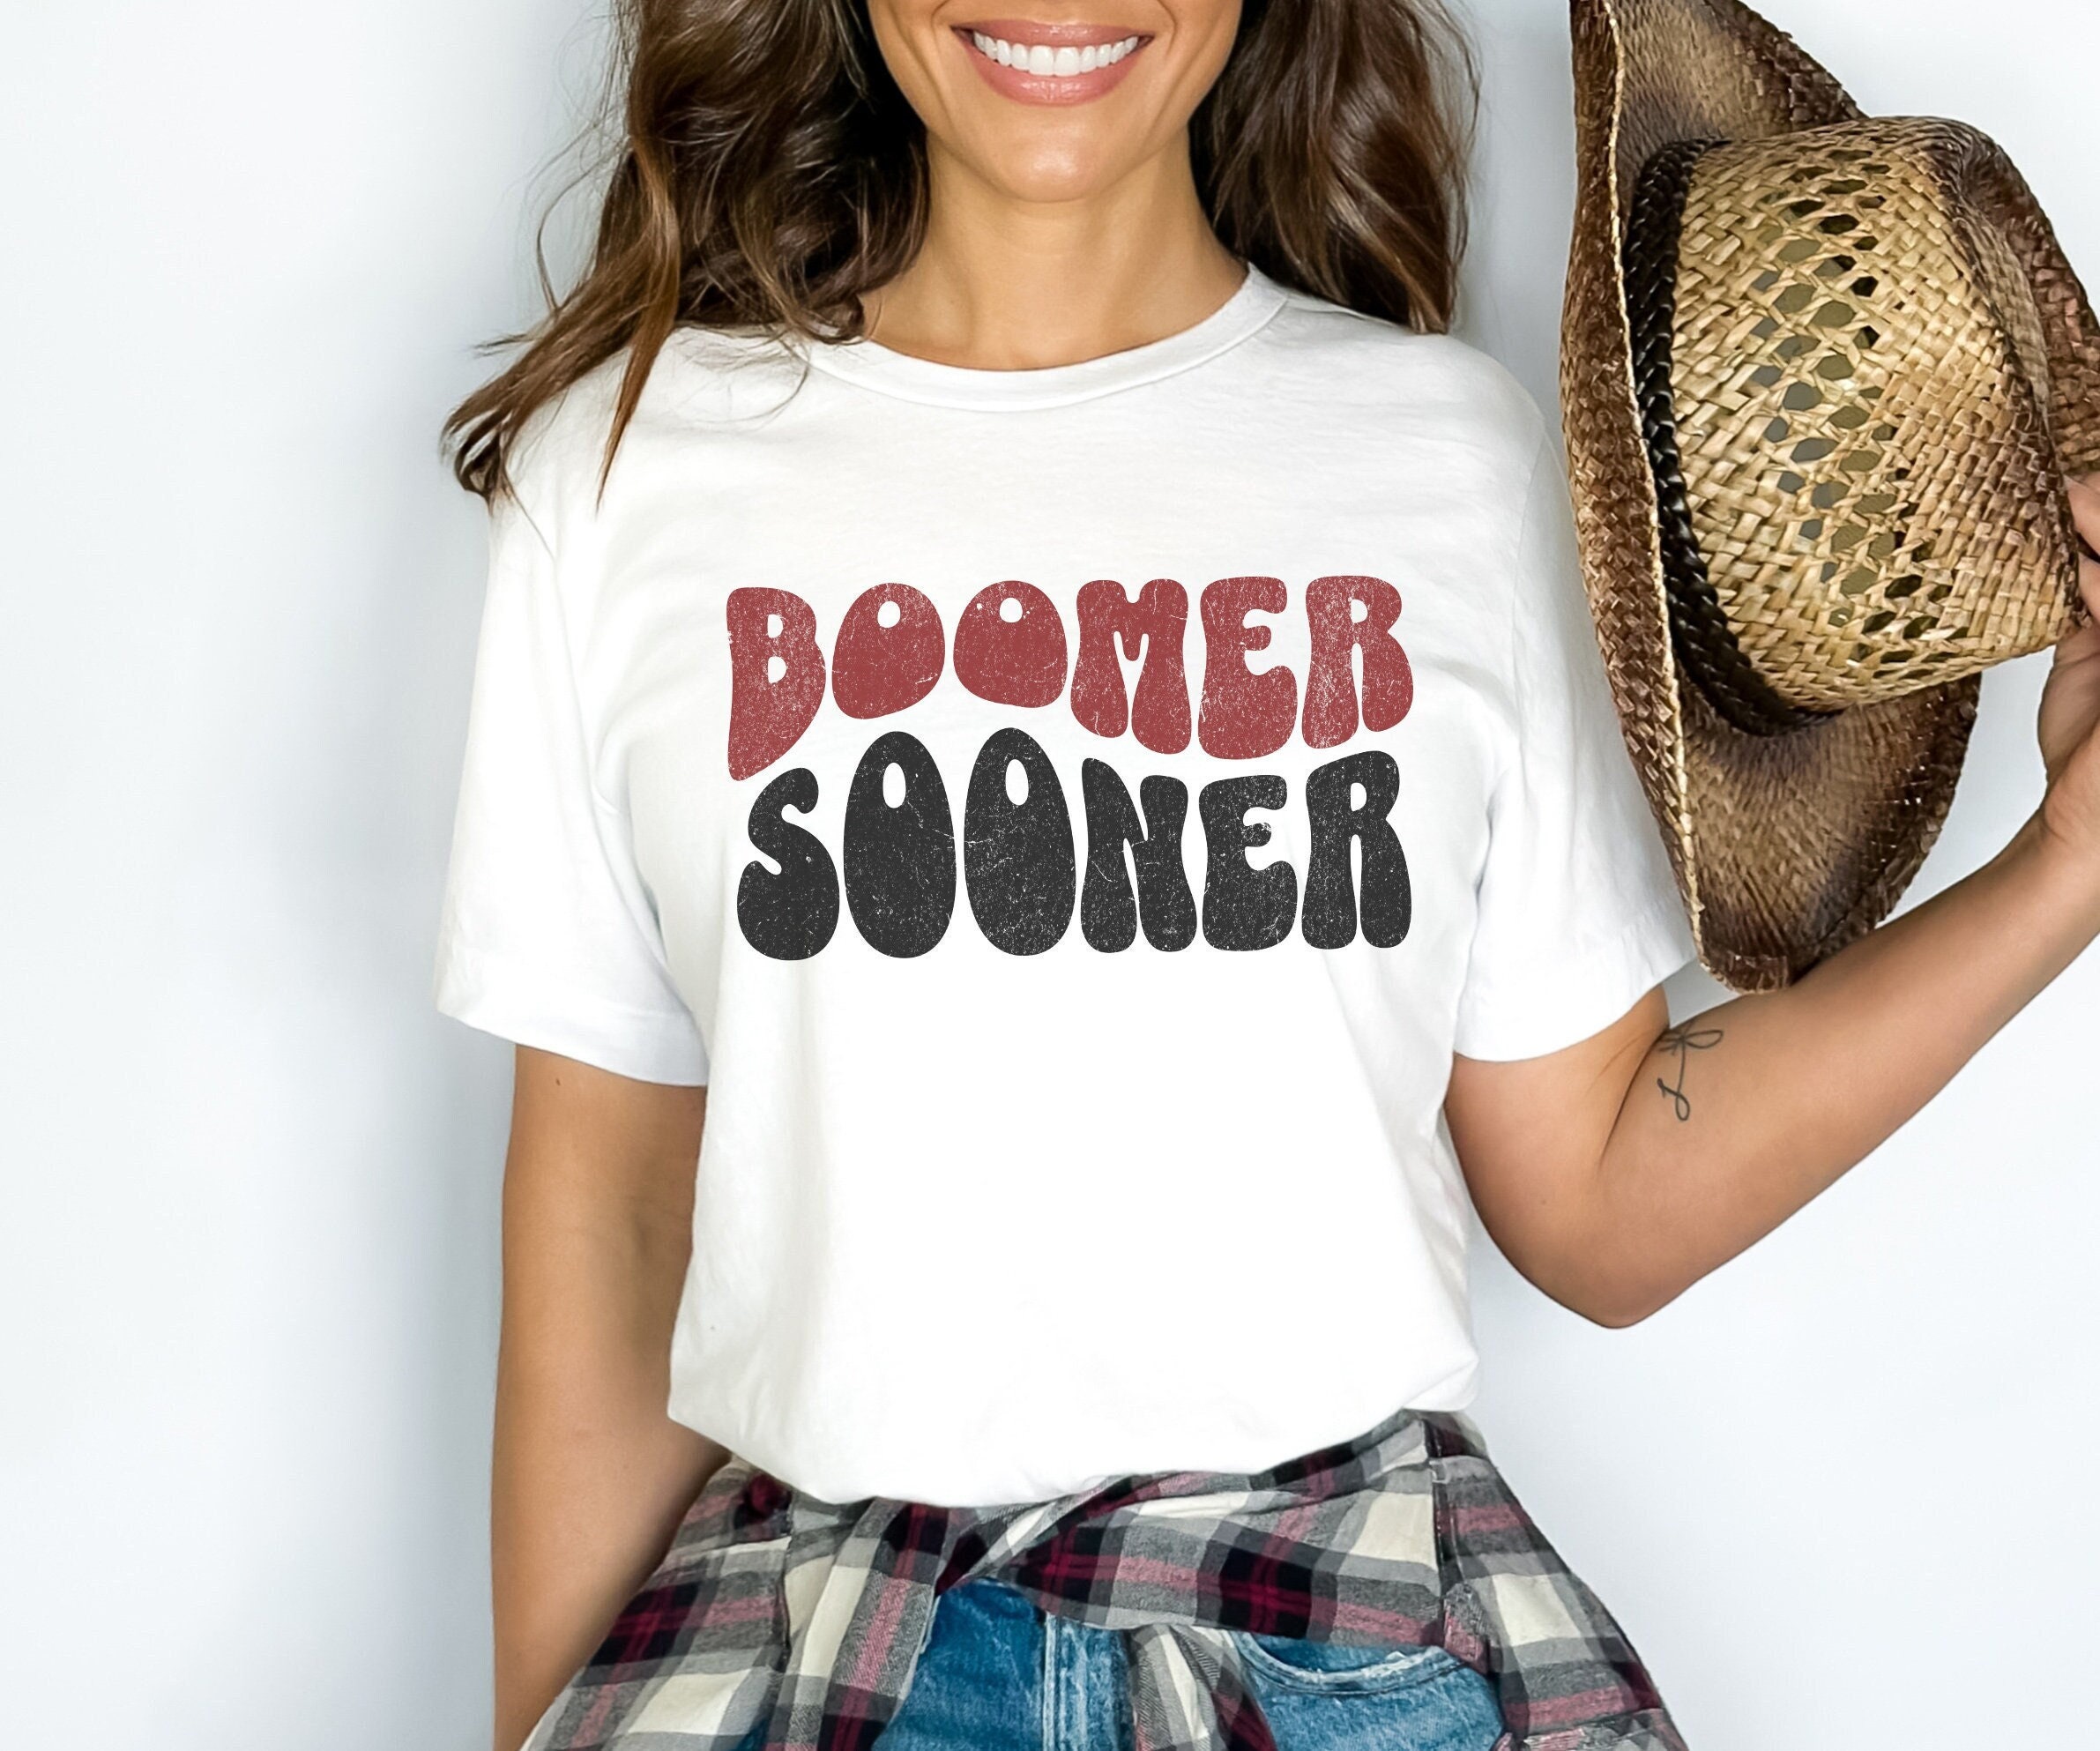 OK Boomer Banner Tee - Unisex Jersey Short Sleeve Tee – BLU MOON